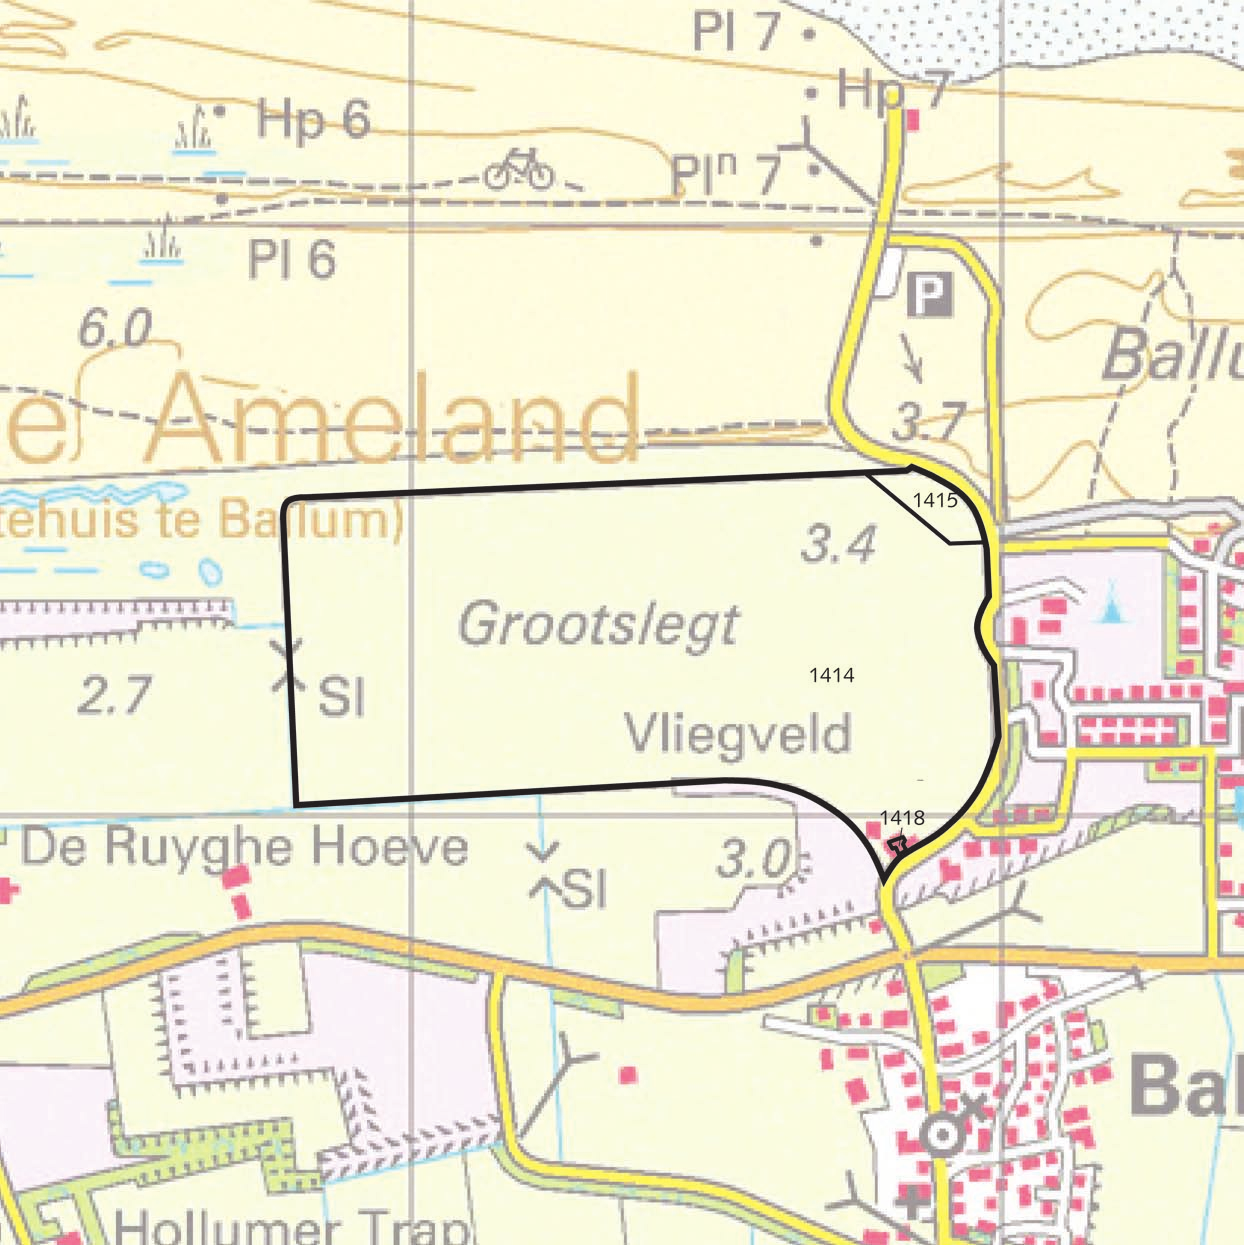 luchthaven Ameland bijlage A Kadastrale kaart en lijsten grens luchtvaartterrein grens